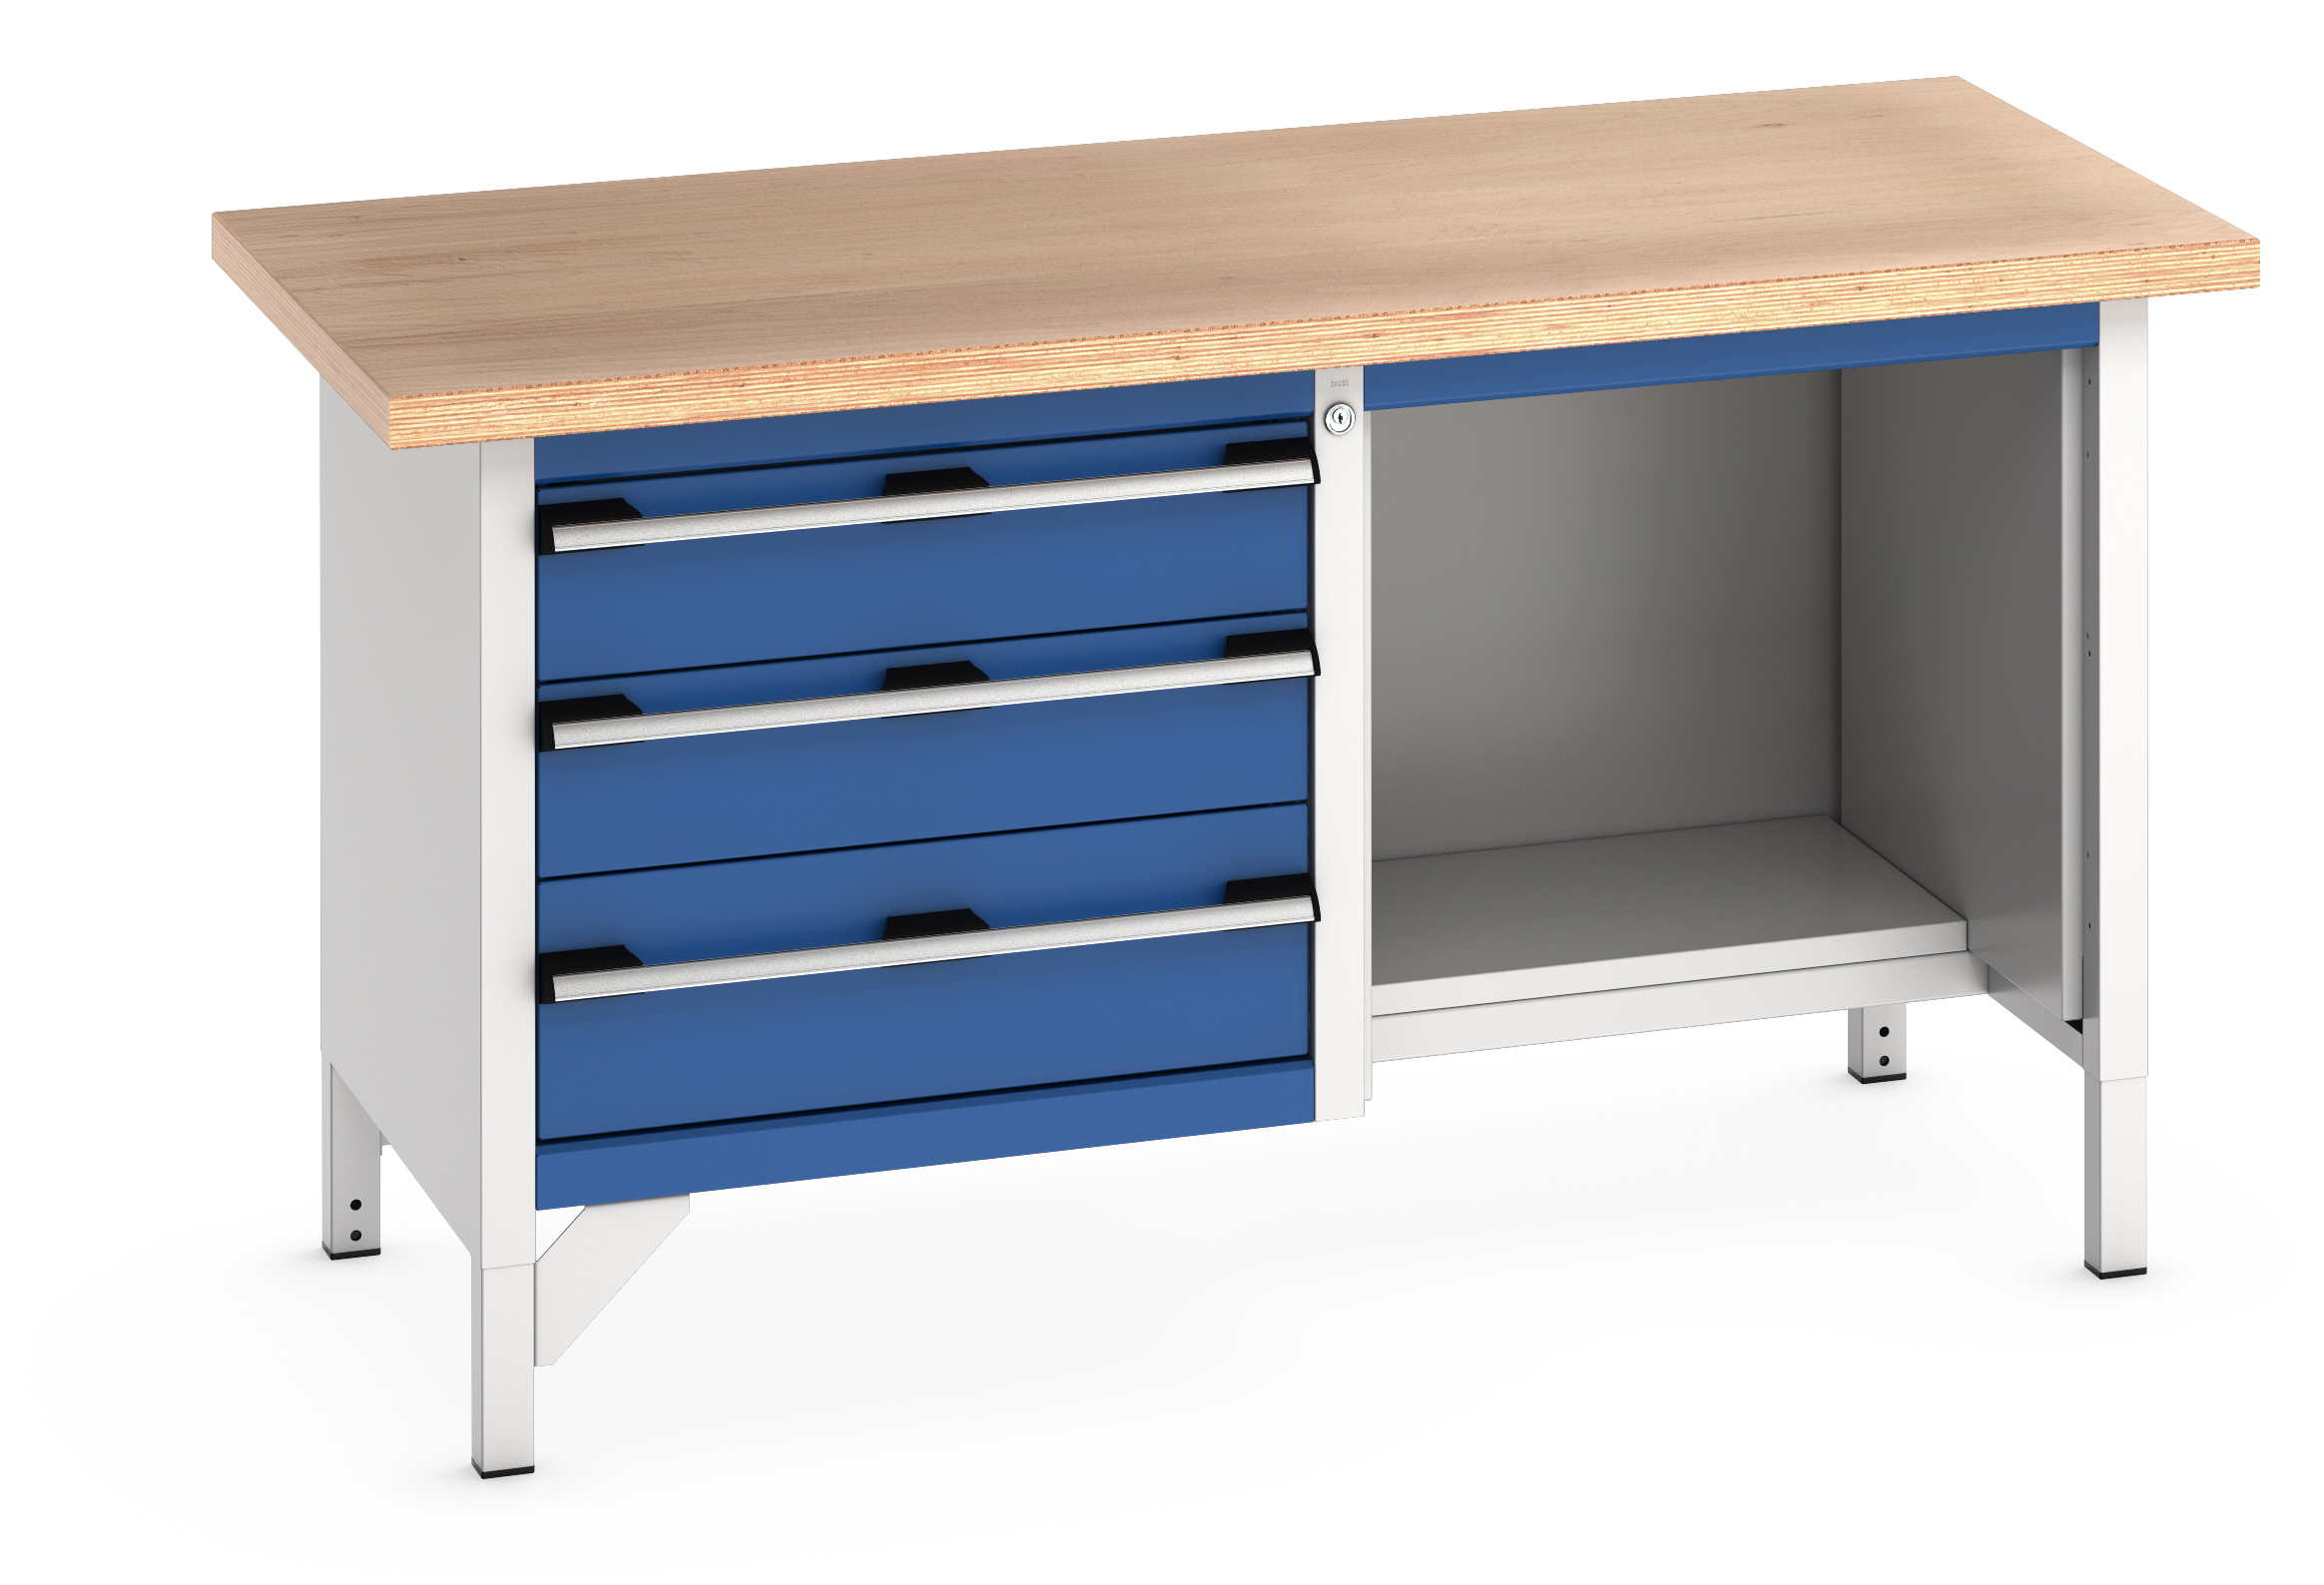 Bott Cubio Storage Bench With 3 Drawer Cabinet / Open With Half Depth Base Shelf - 41002040.11V